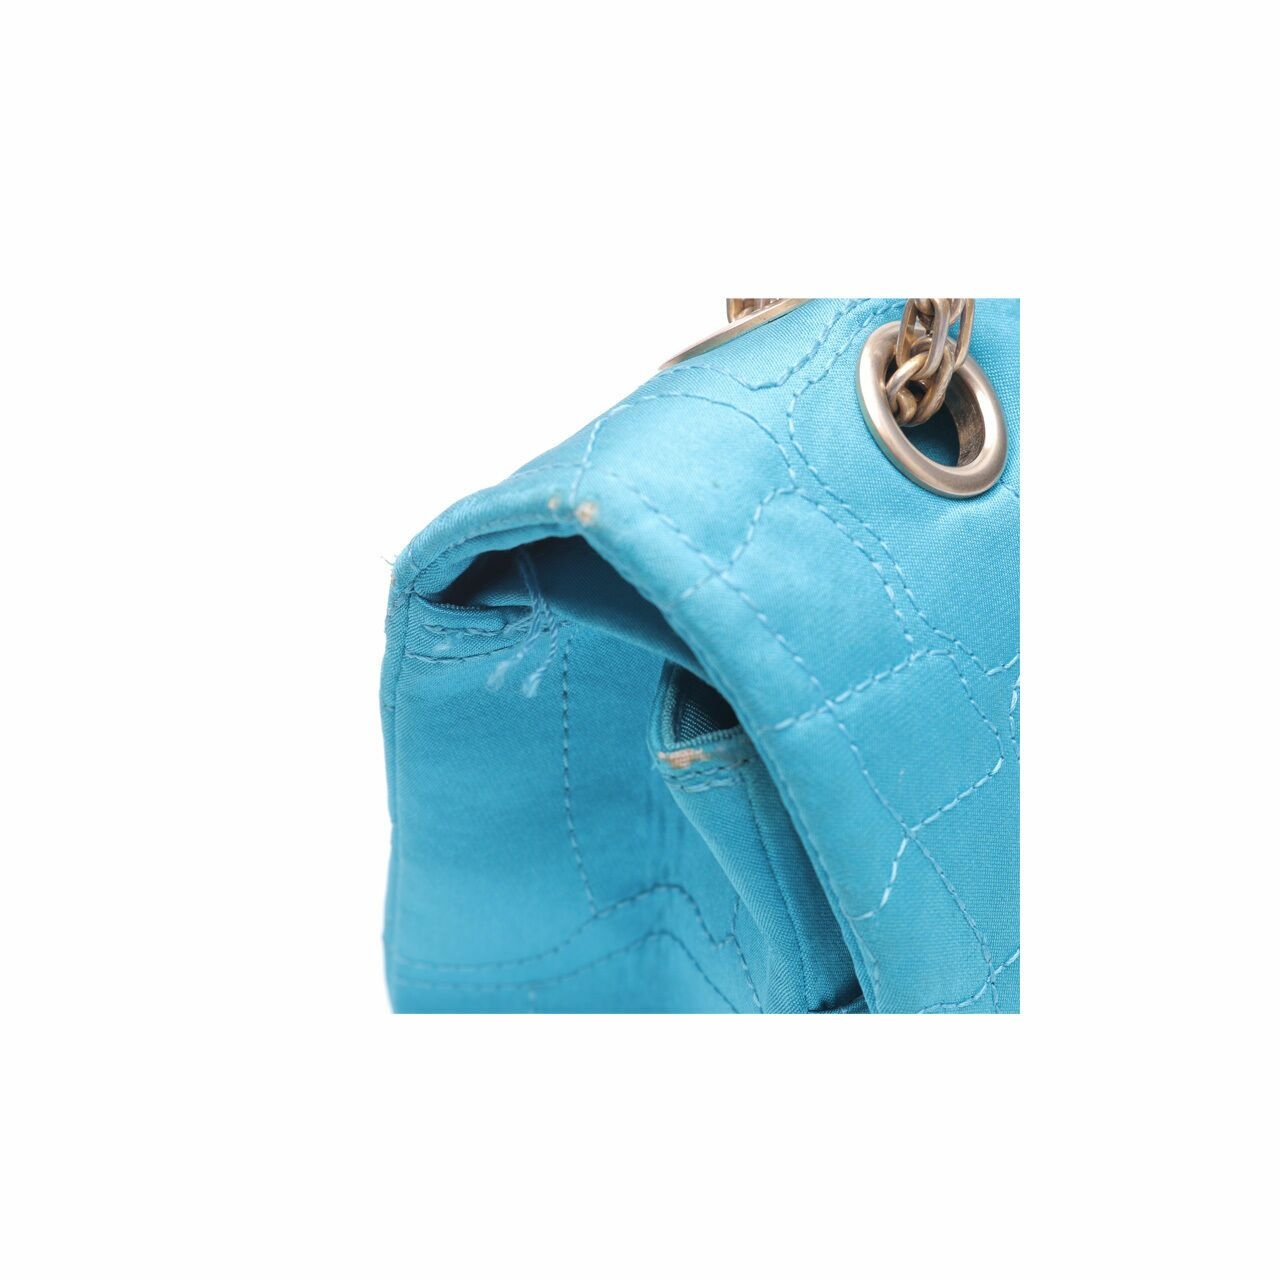 Chanel Reissue Satin Croco Embossed Turquoise Shoulder Bag